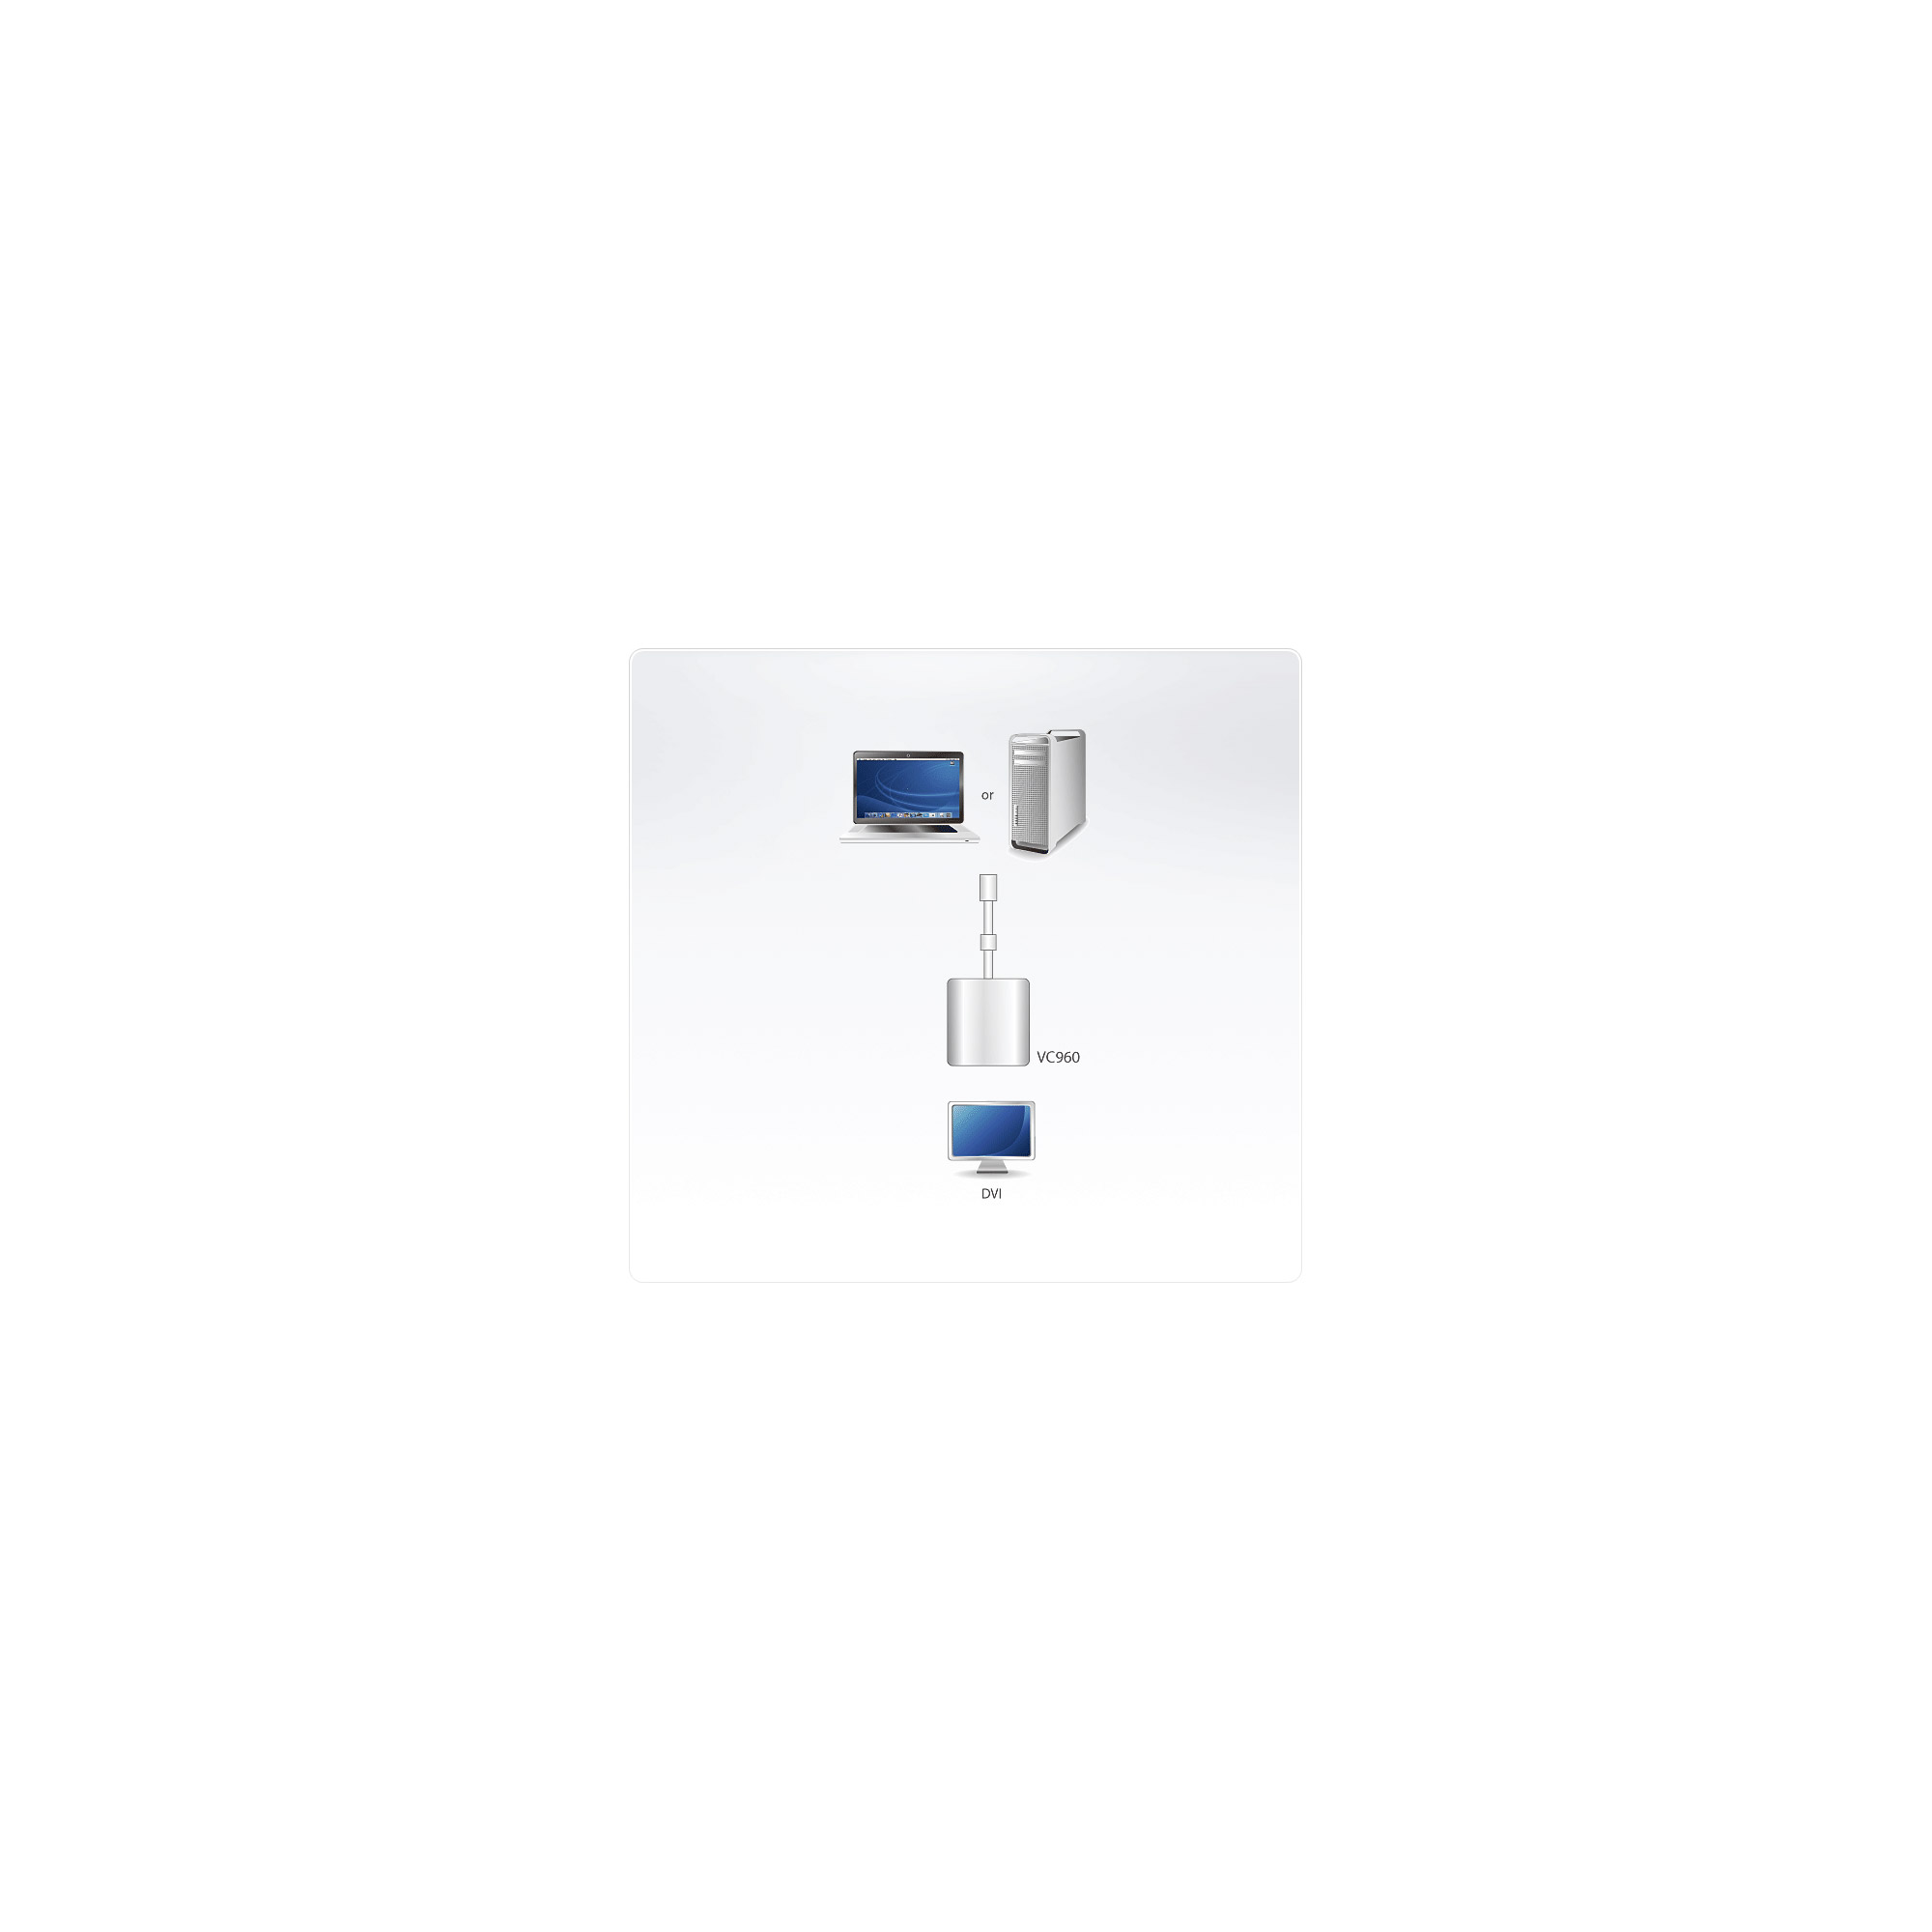 ATEN VC960 Video-Konverter Mini DisplayPort zu DVI